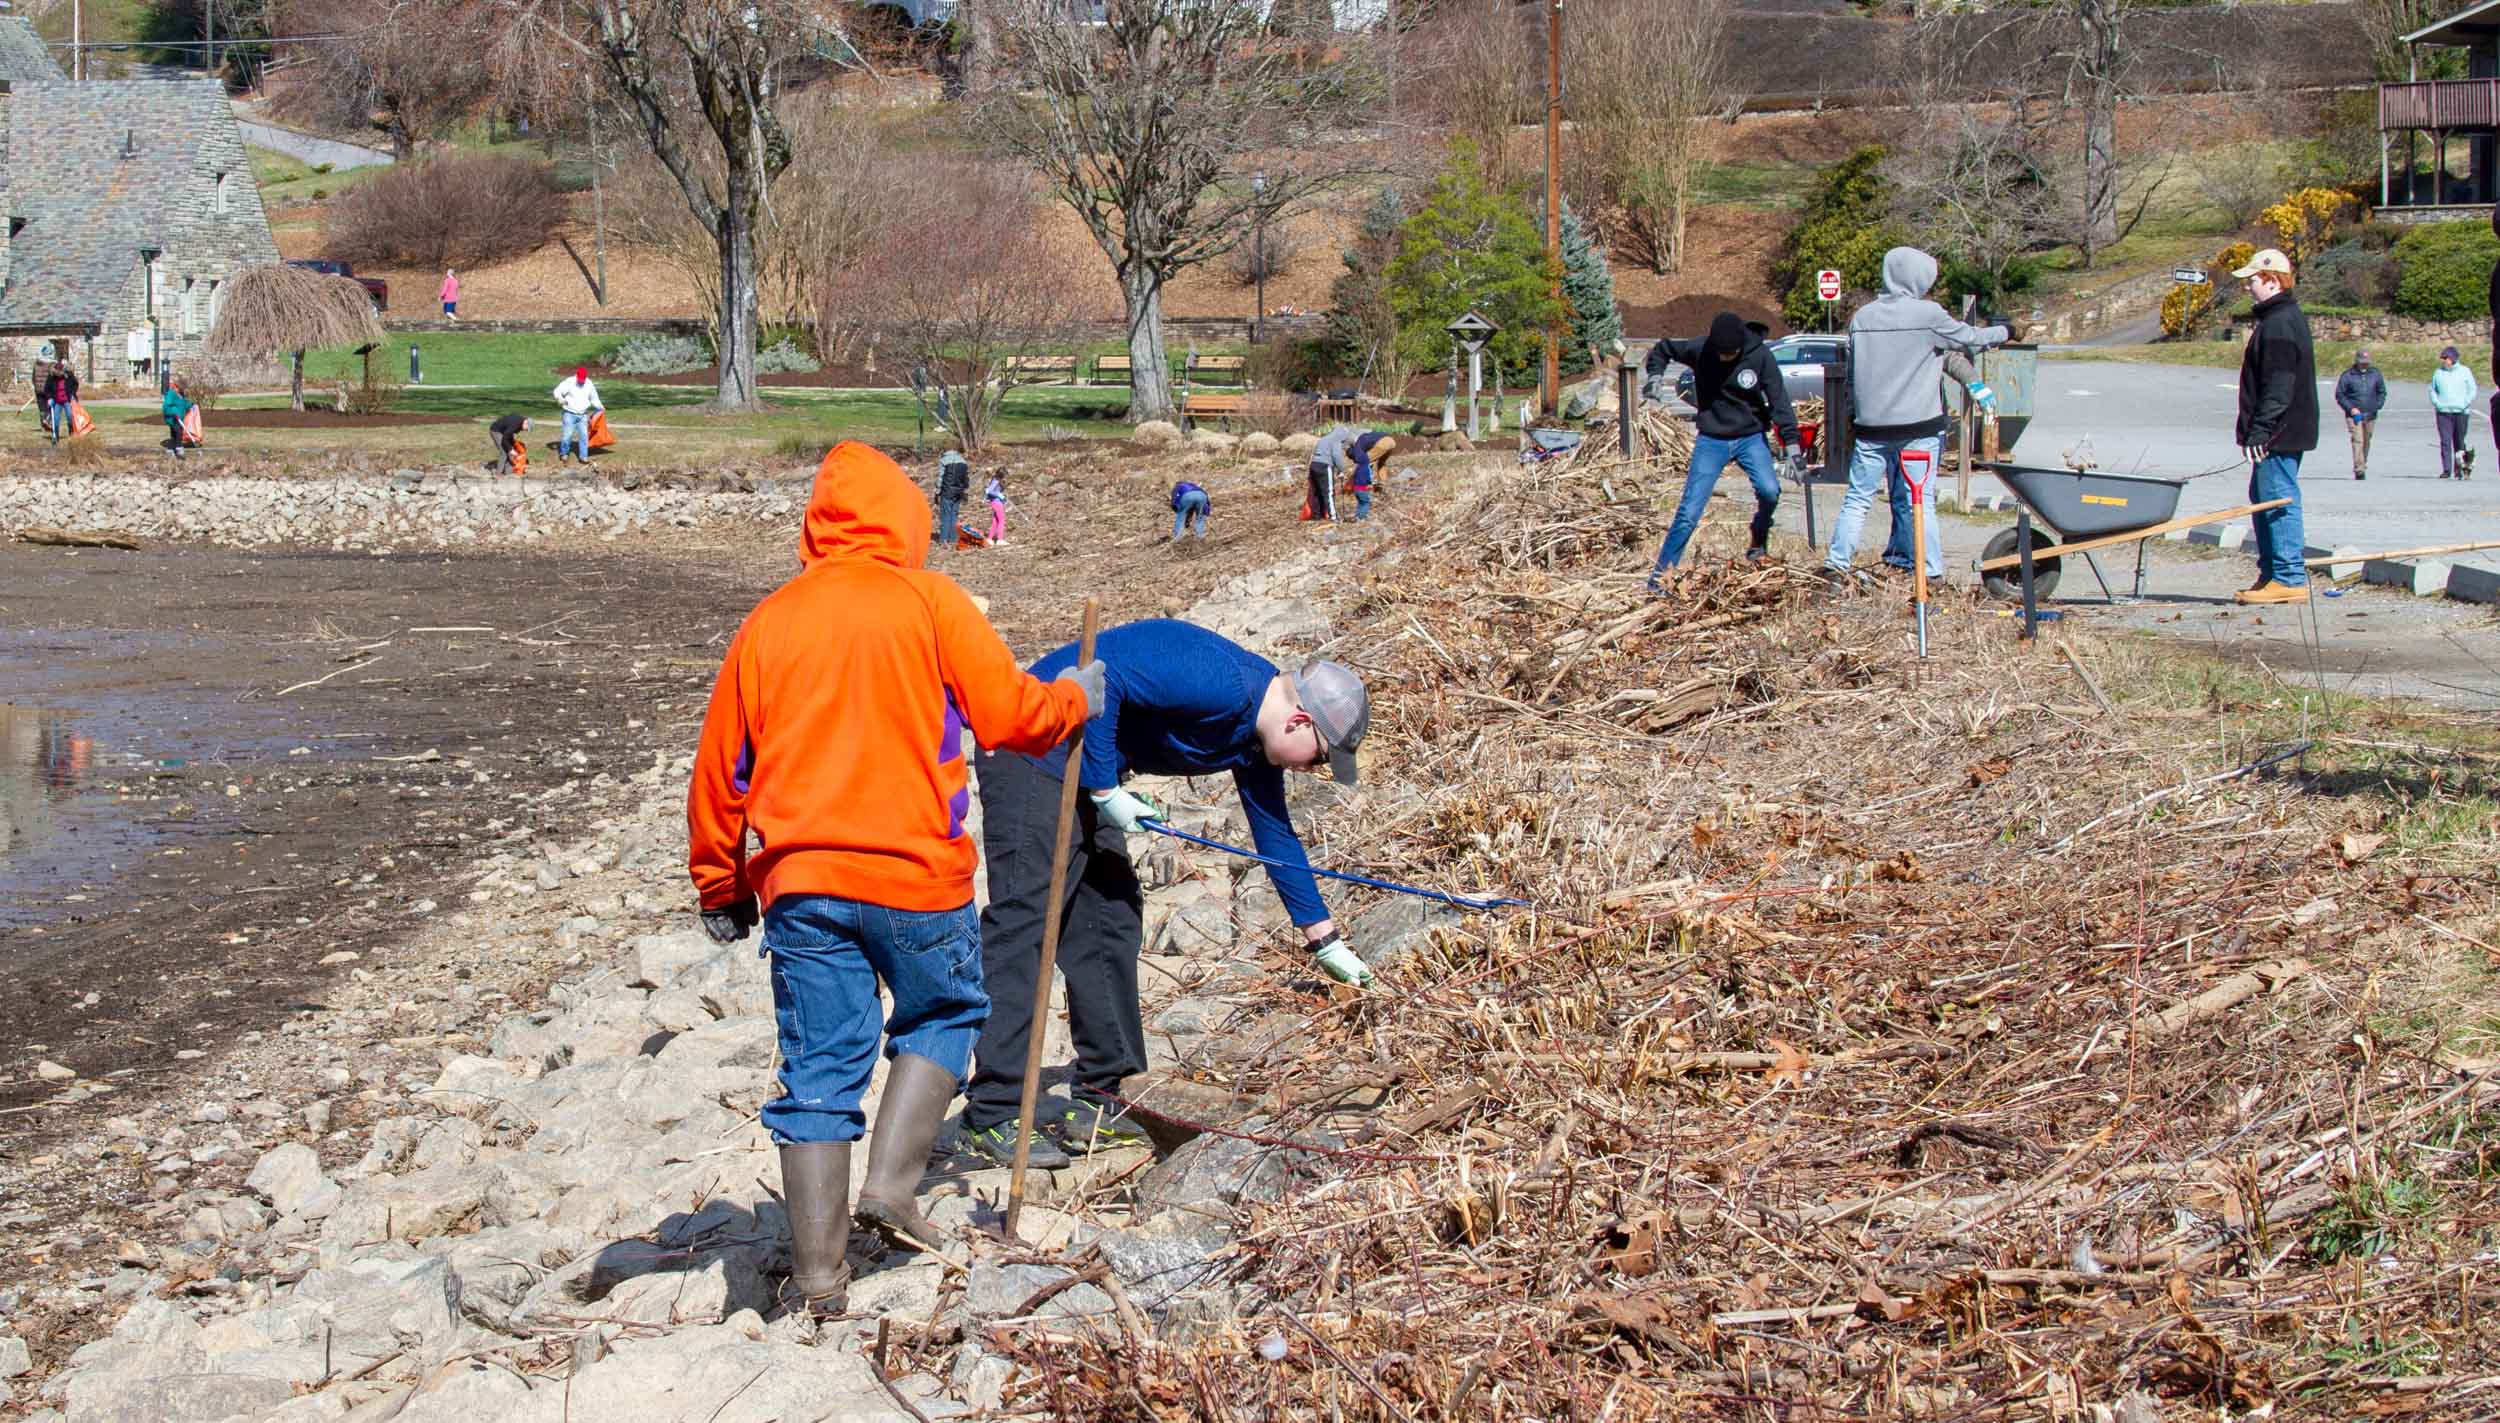 Lake clean up day volunteers clean the shoreline